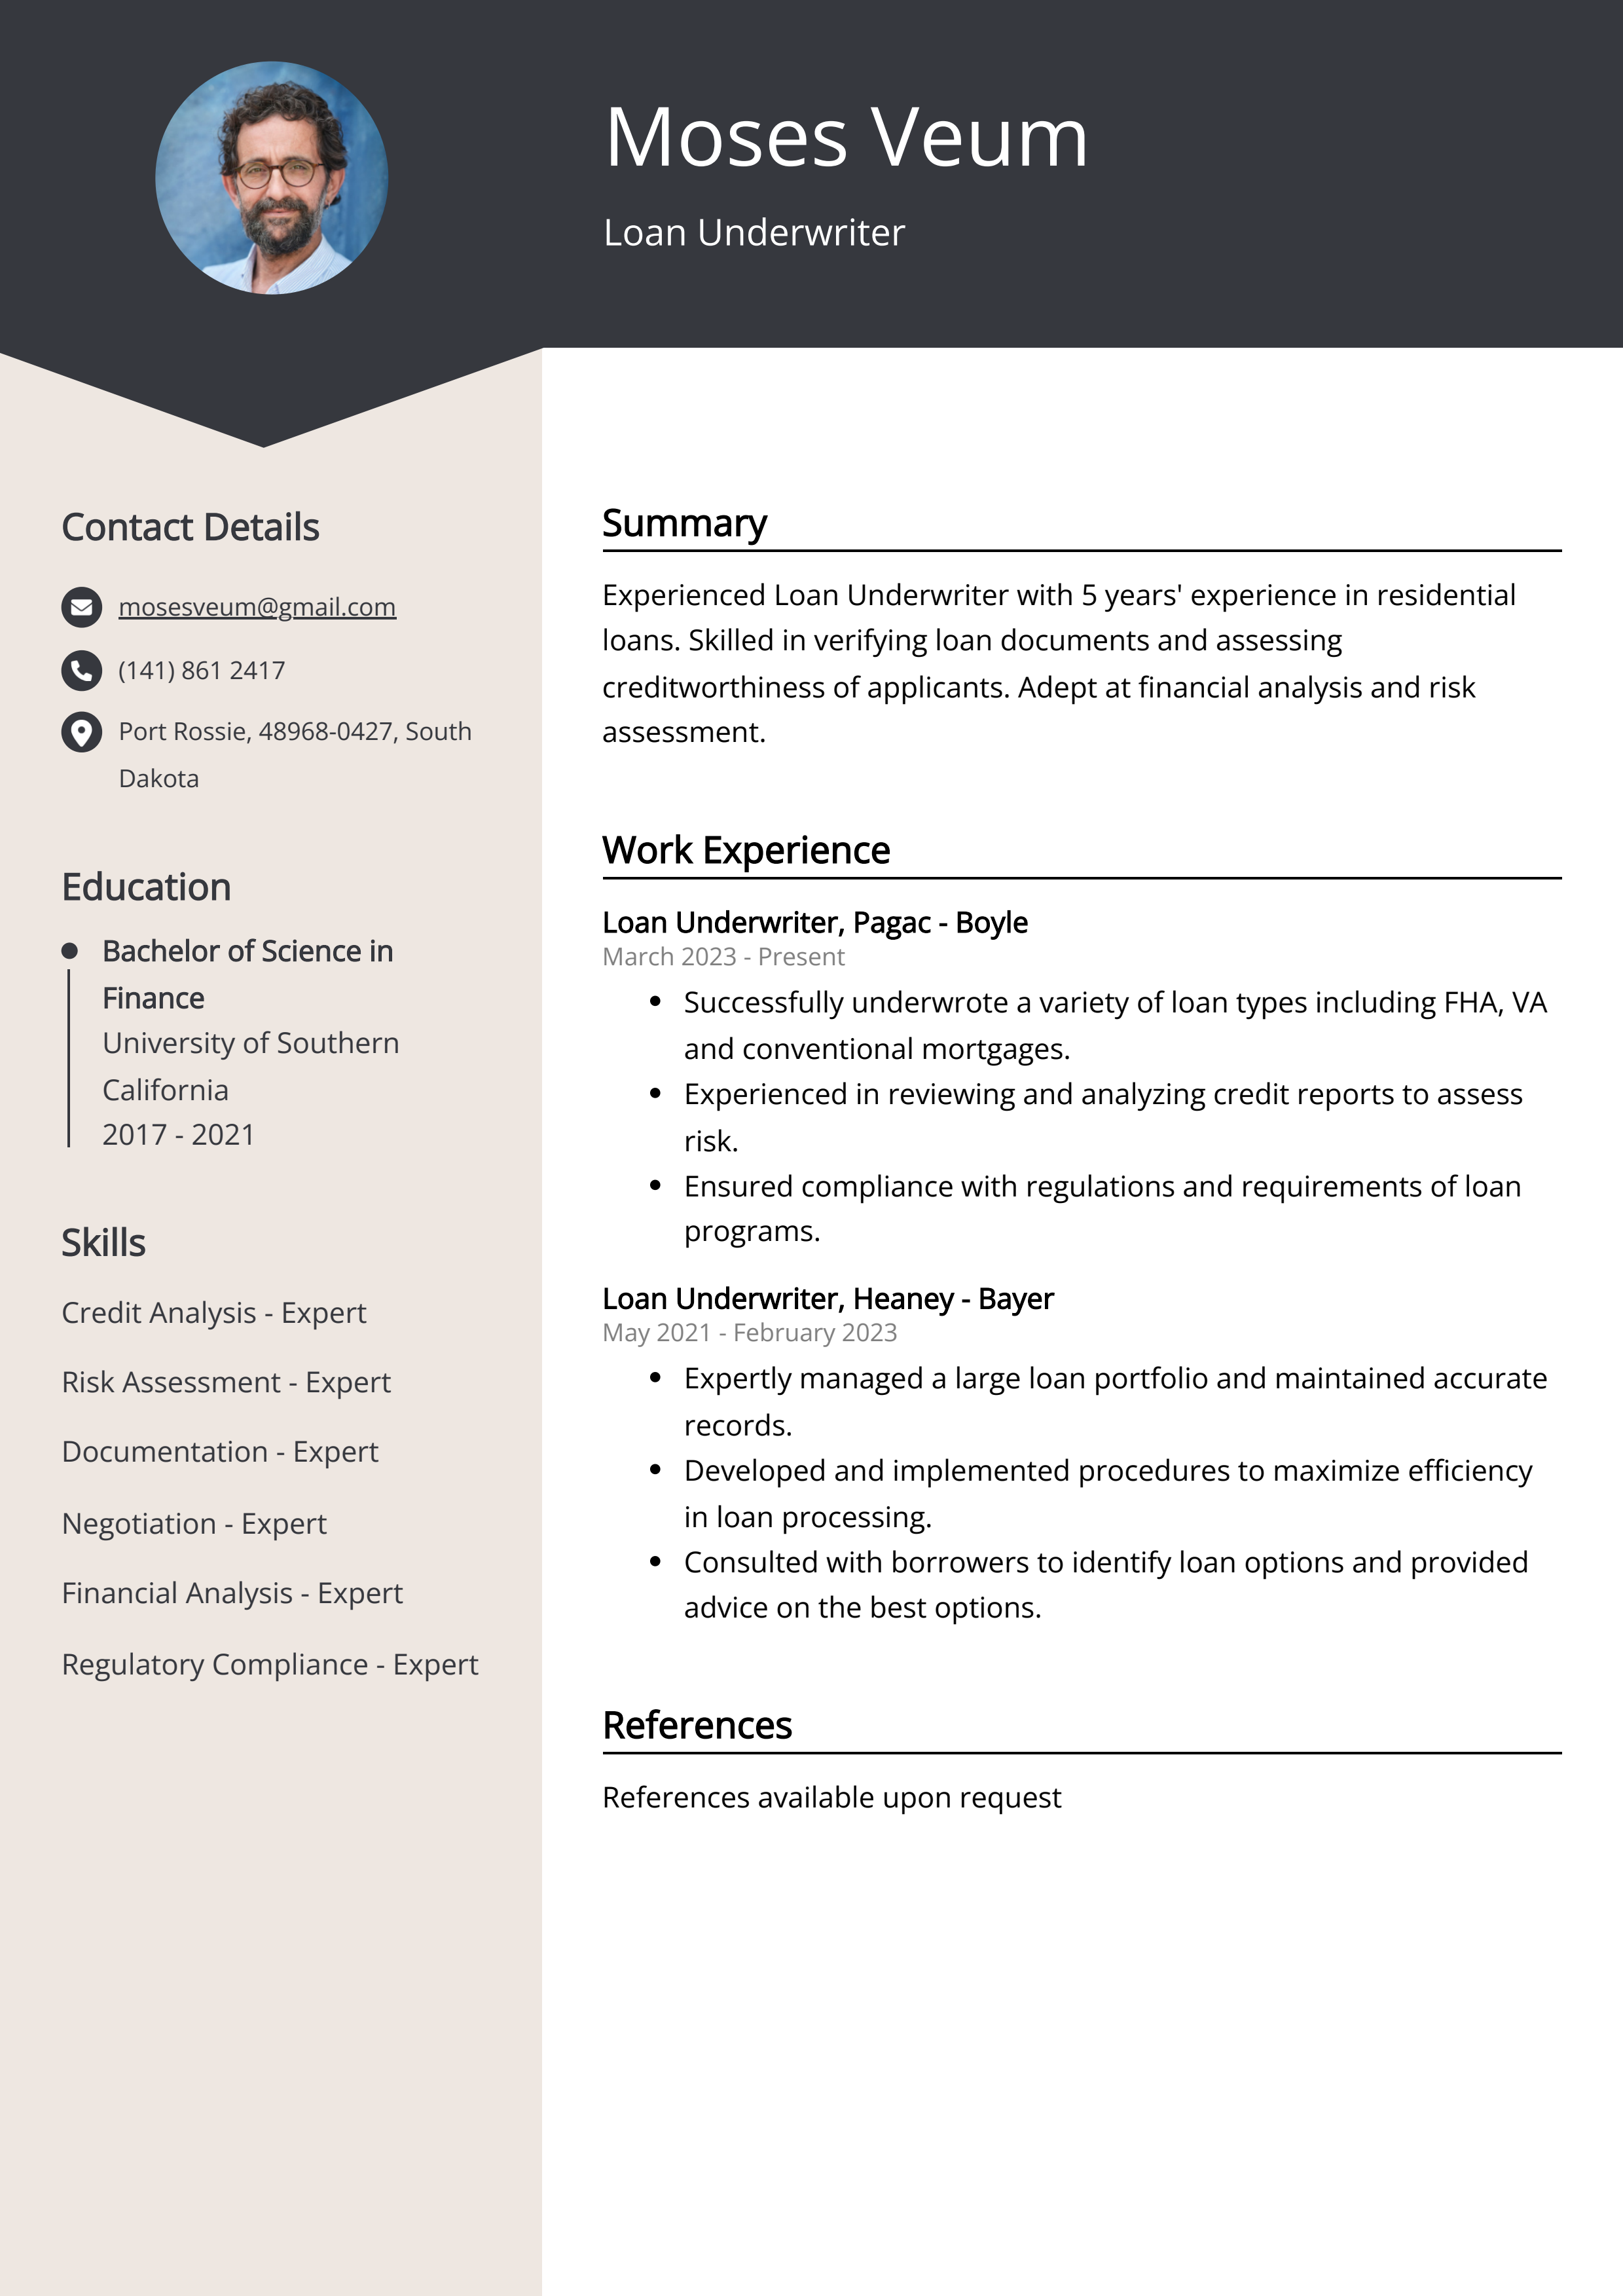 Loan Underwriter CV Example